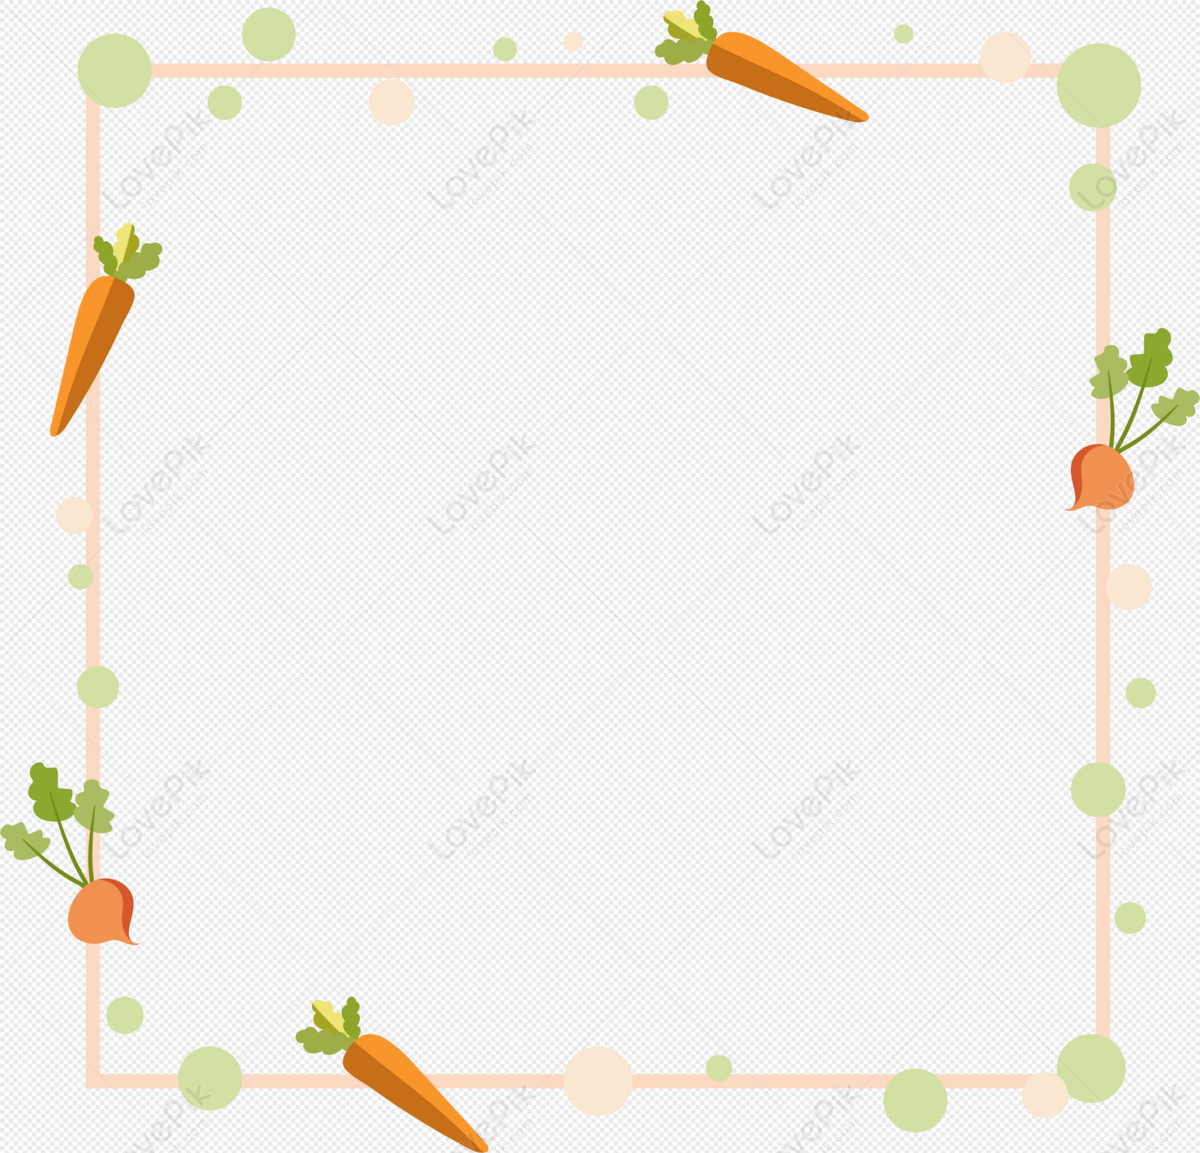 Vegetable Cartoon Fruits And Vegetables Border Background Elemen PNG  Transparent Image And Clipart Image For Free Download - Lovepik | 401499467